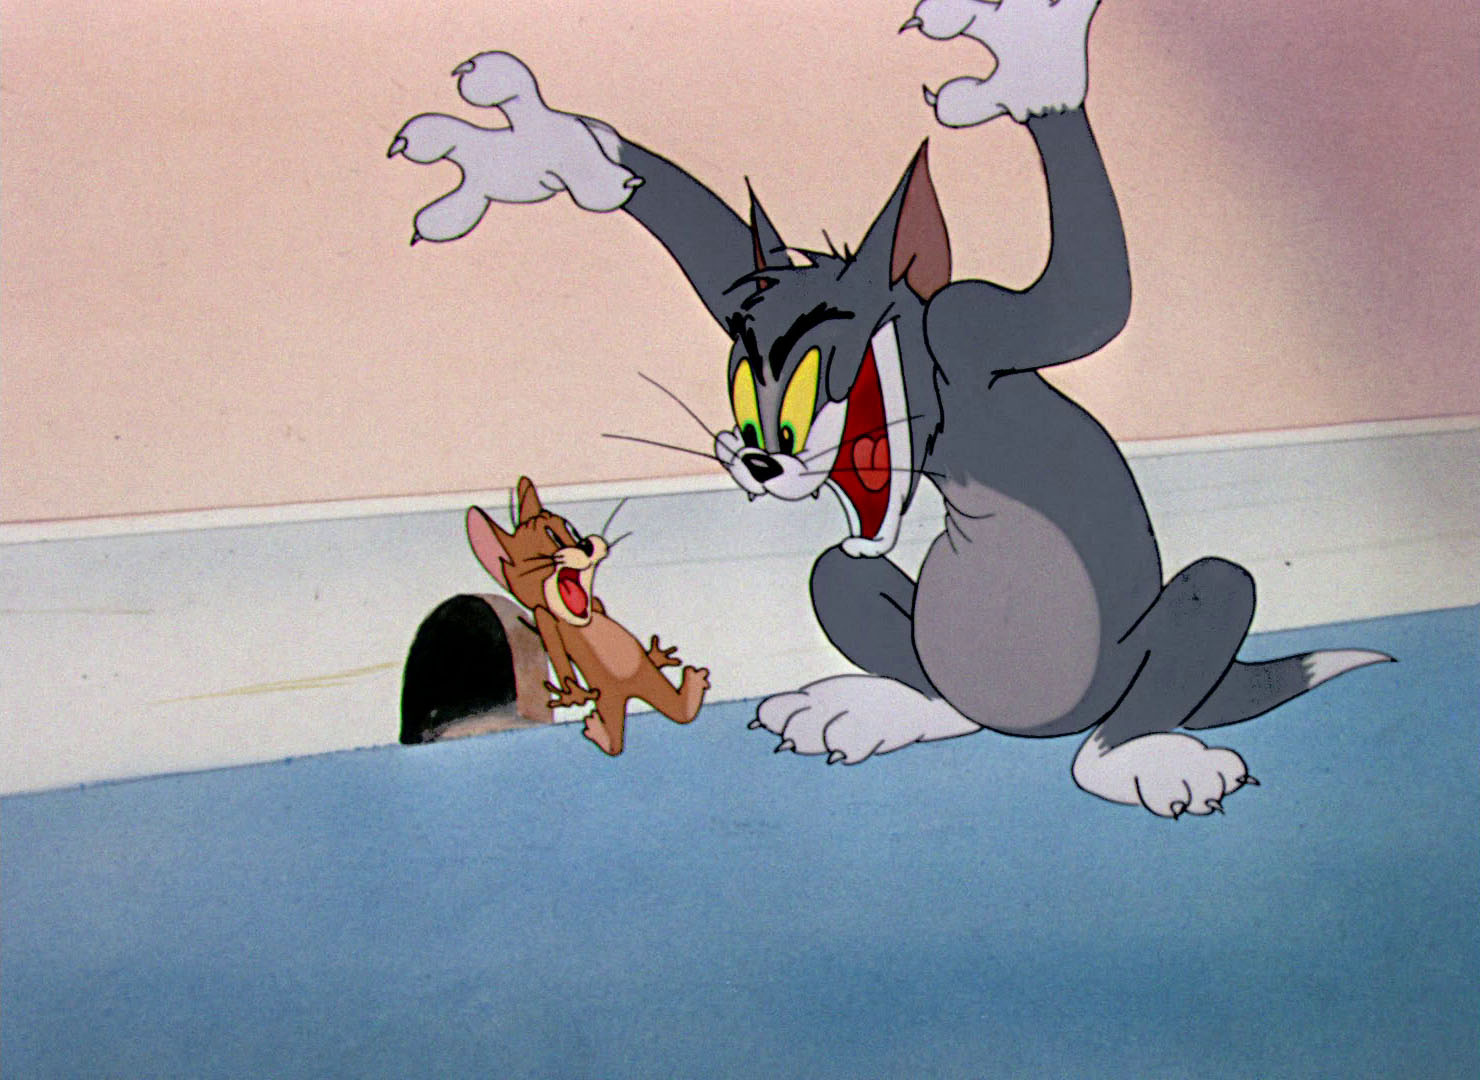 Tom Jerry Pictures: Trap Happy. tomandjerrycaps.blogspot.com. 